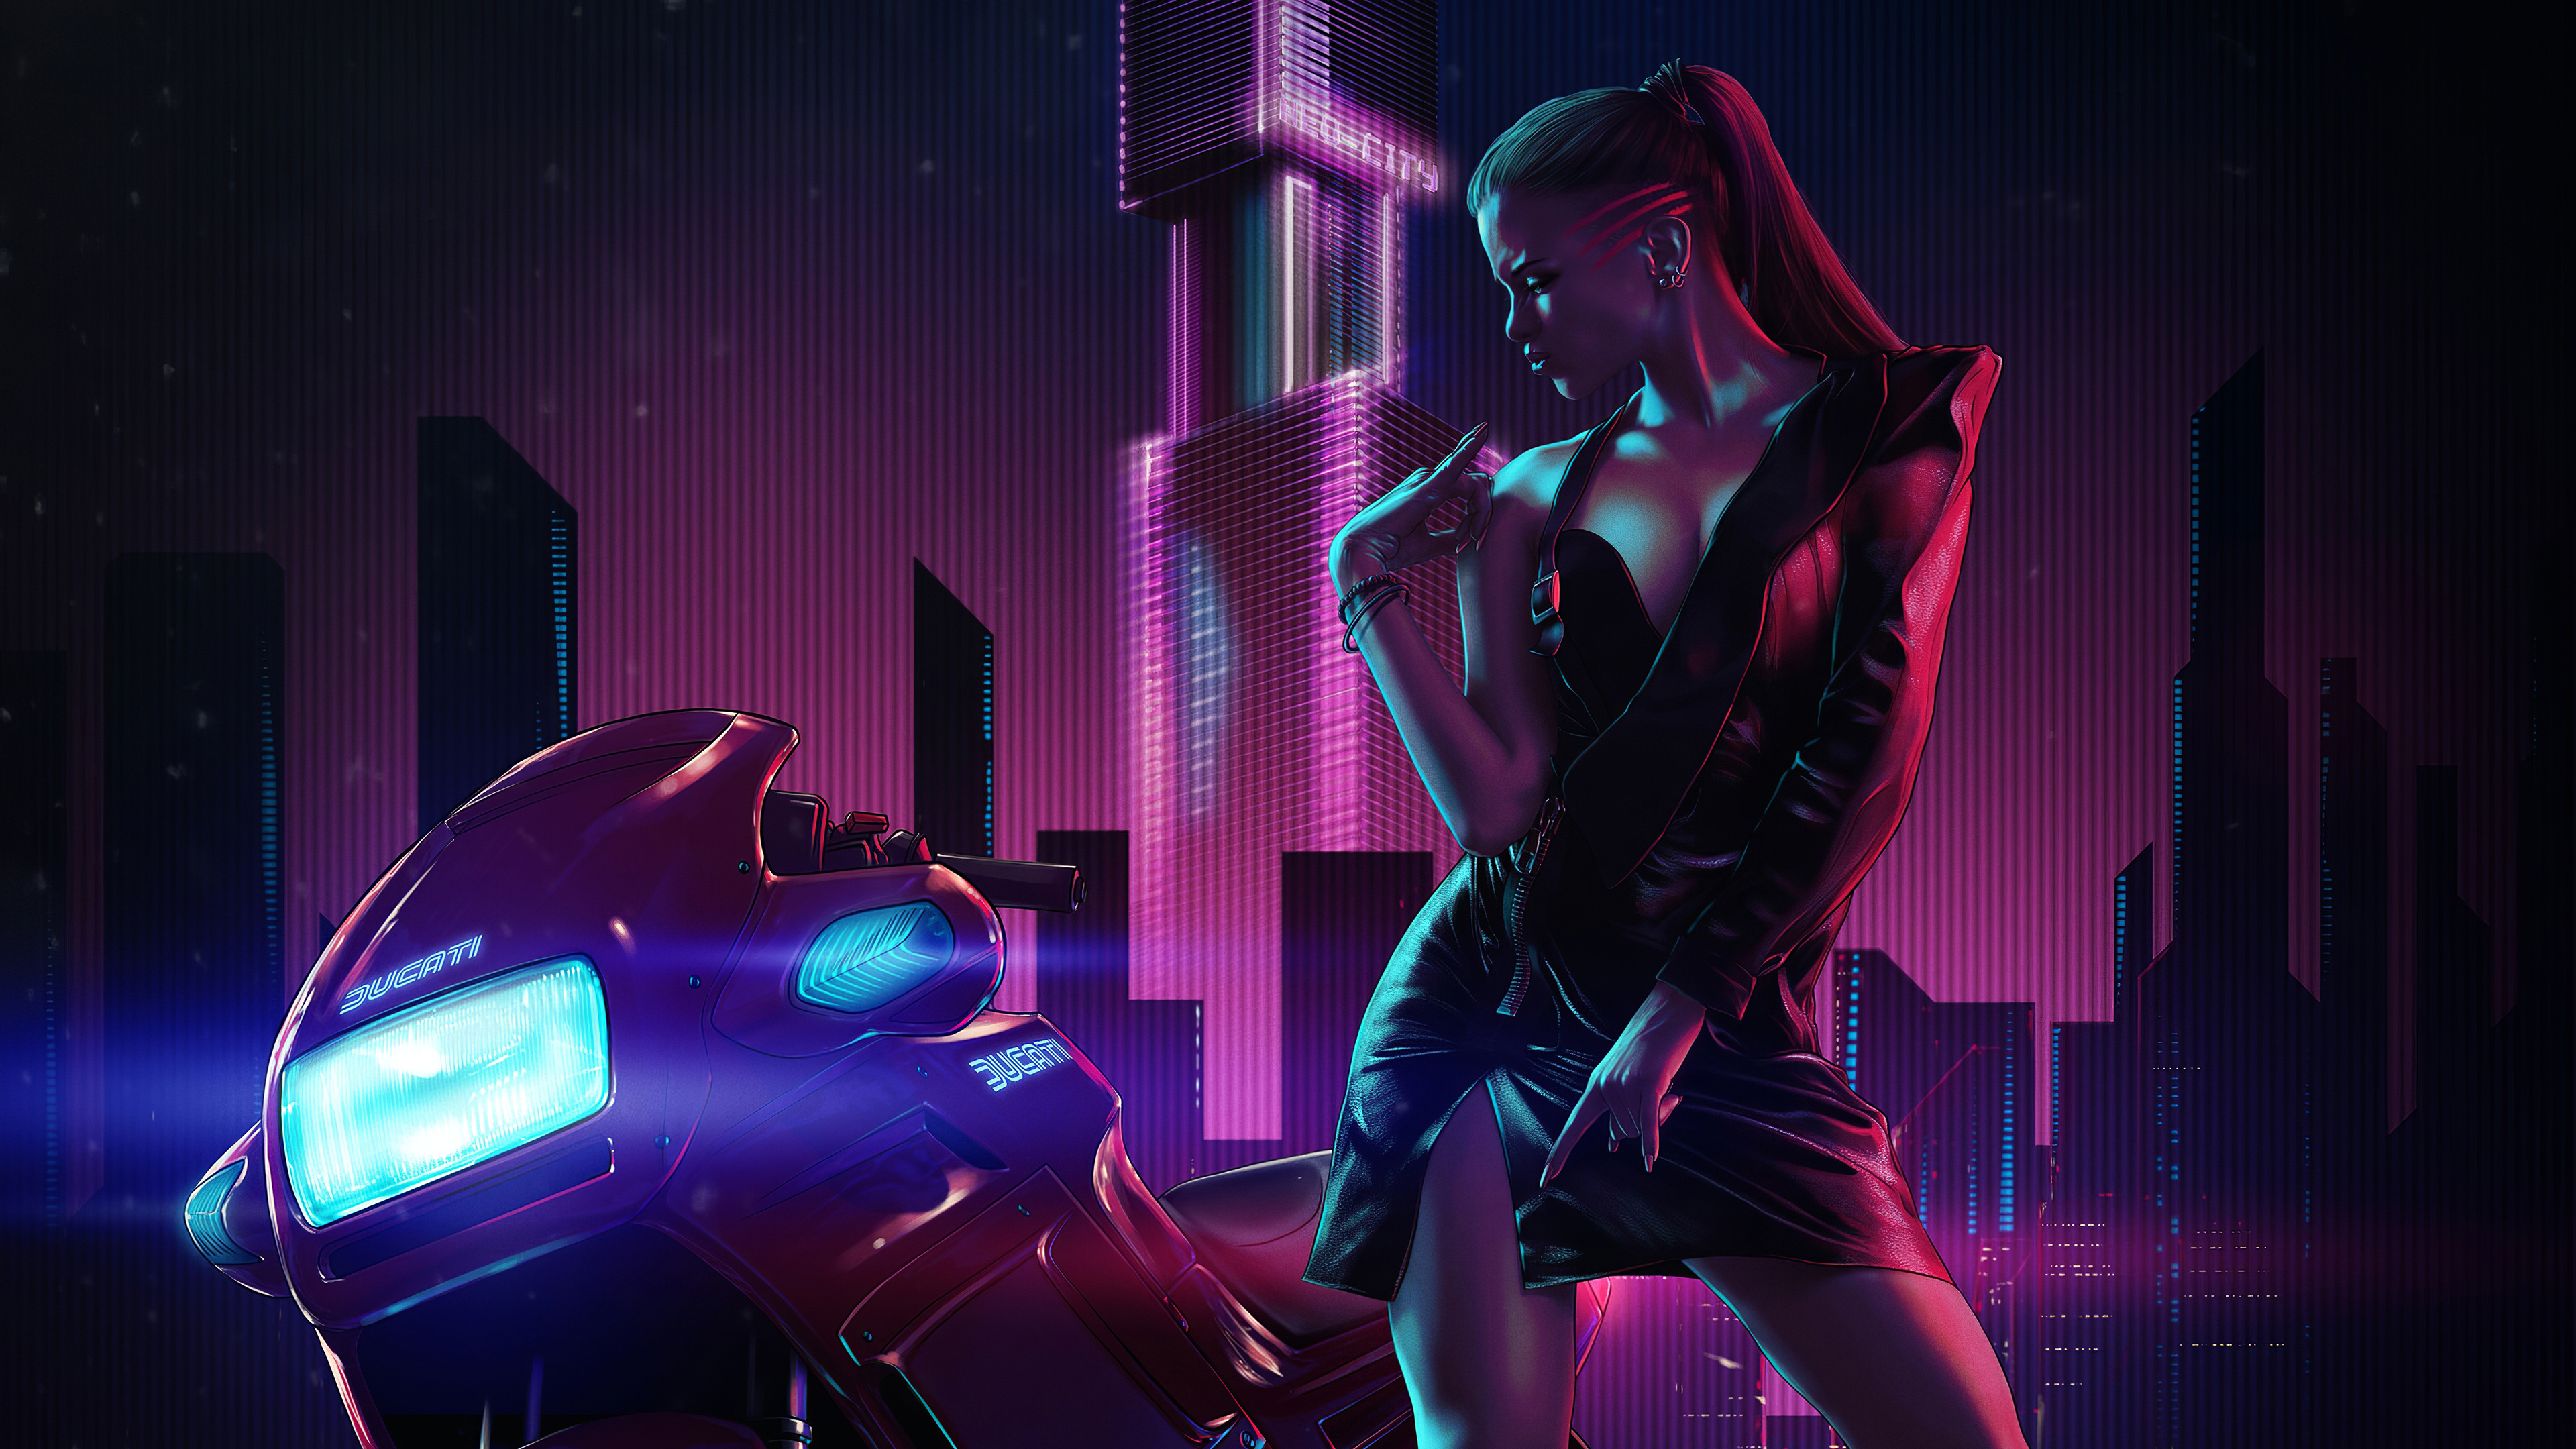 Cyberpunk Girl With Ducati 4k Hd Artist 4k Wallpapers Images 0826